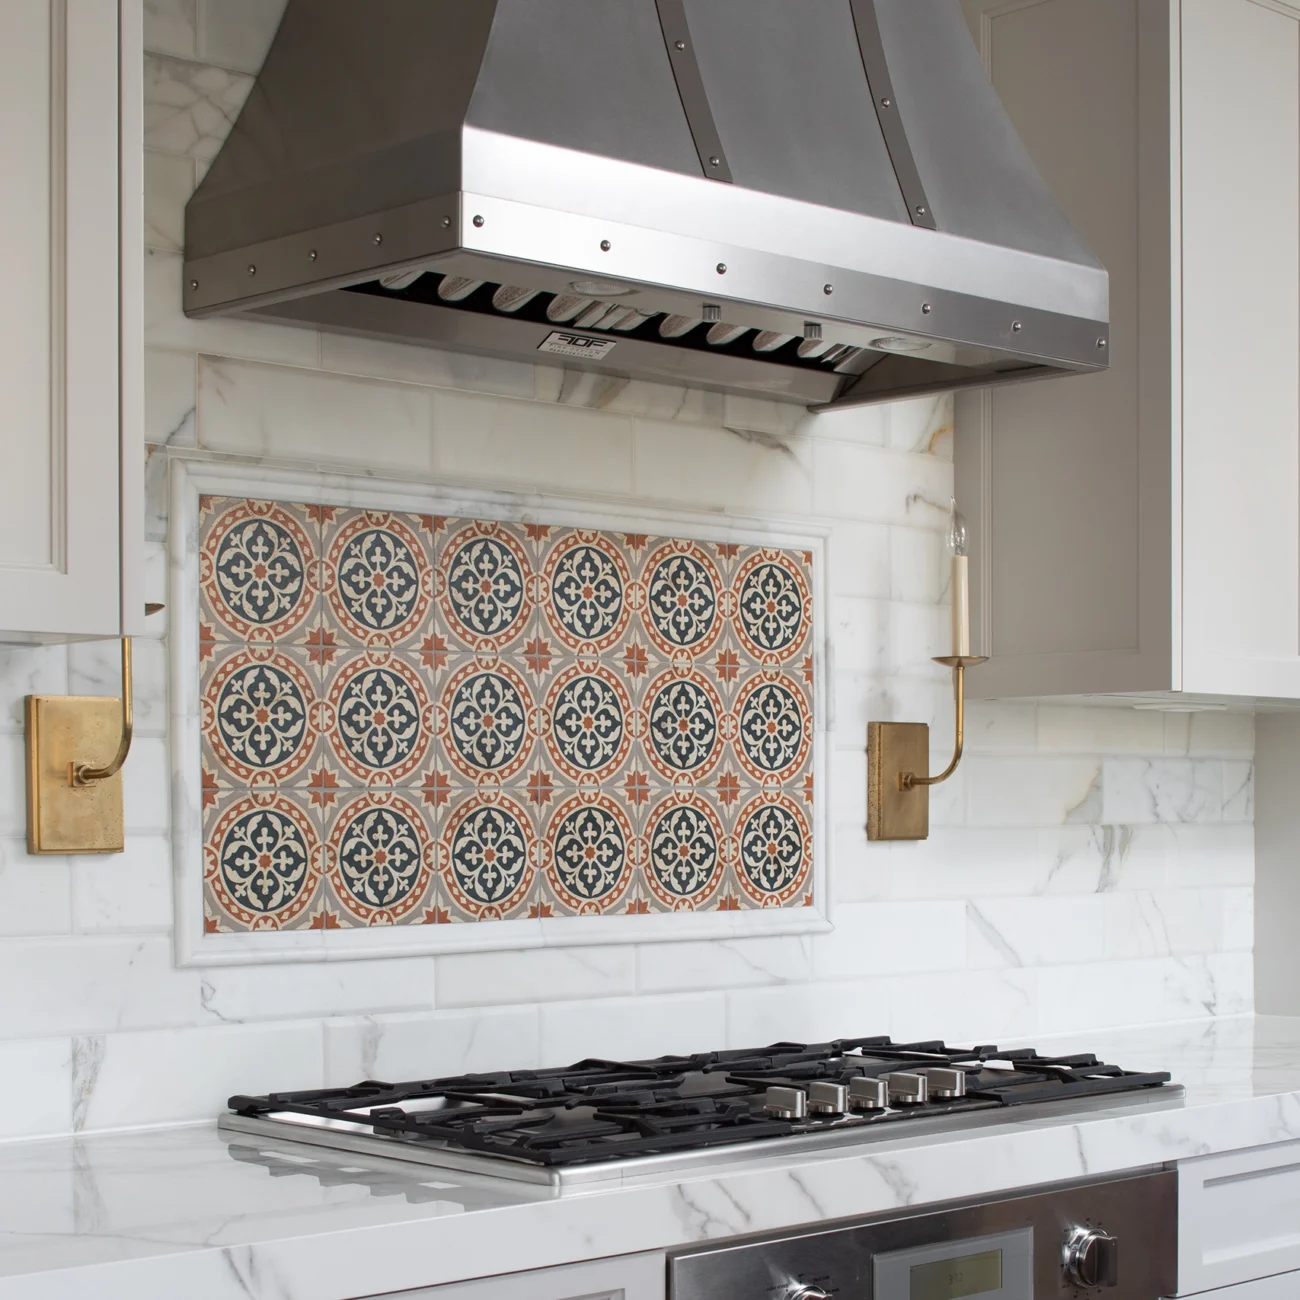 Christine Vroom Interiors | Via Arriba | Kitchen stove with custom range hood and Spanish tile backsplash